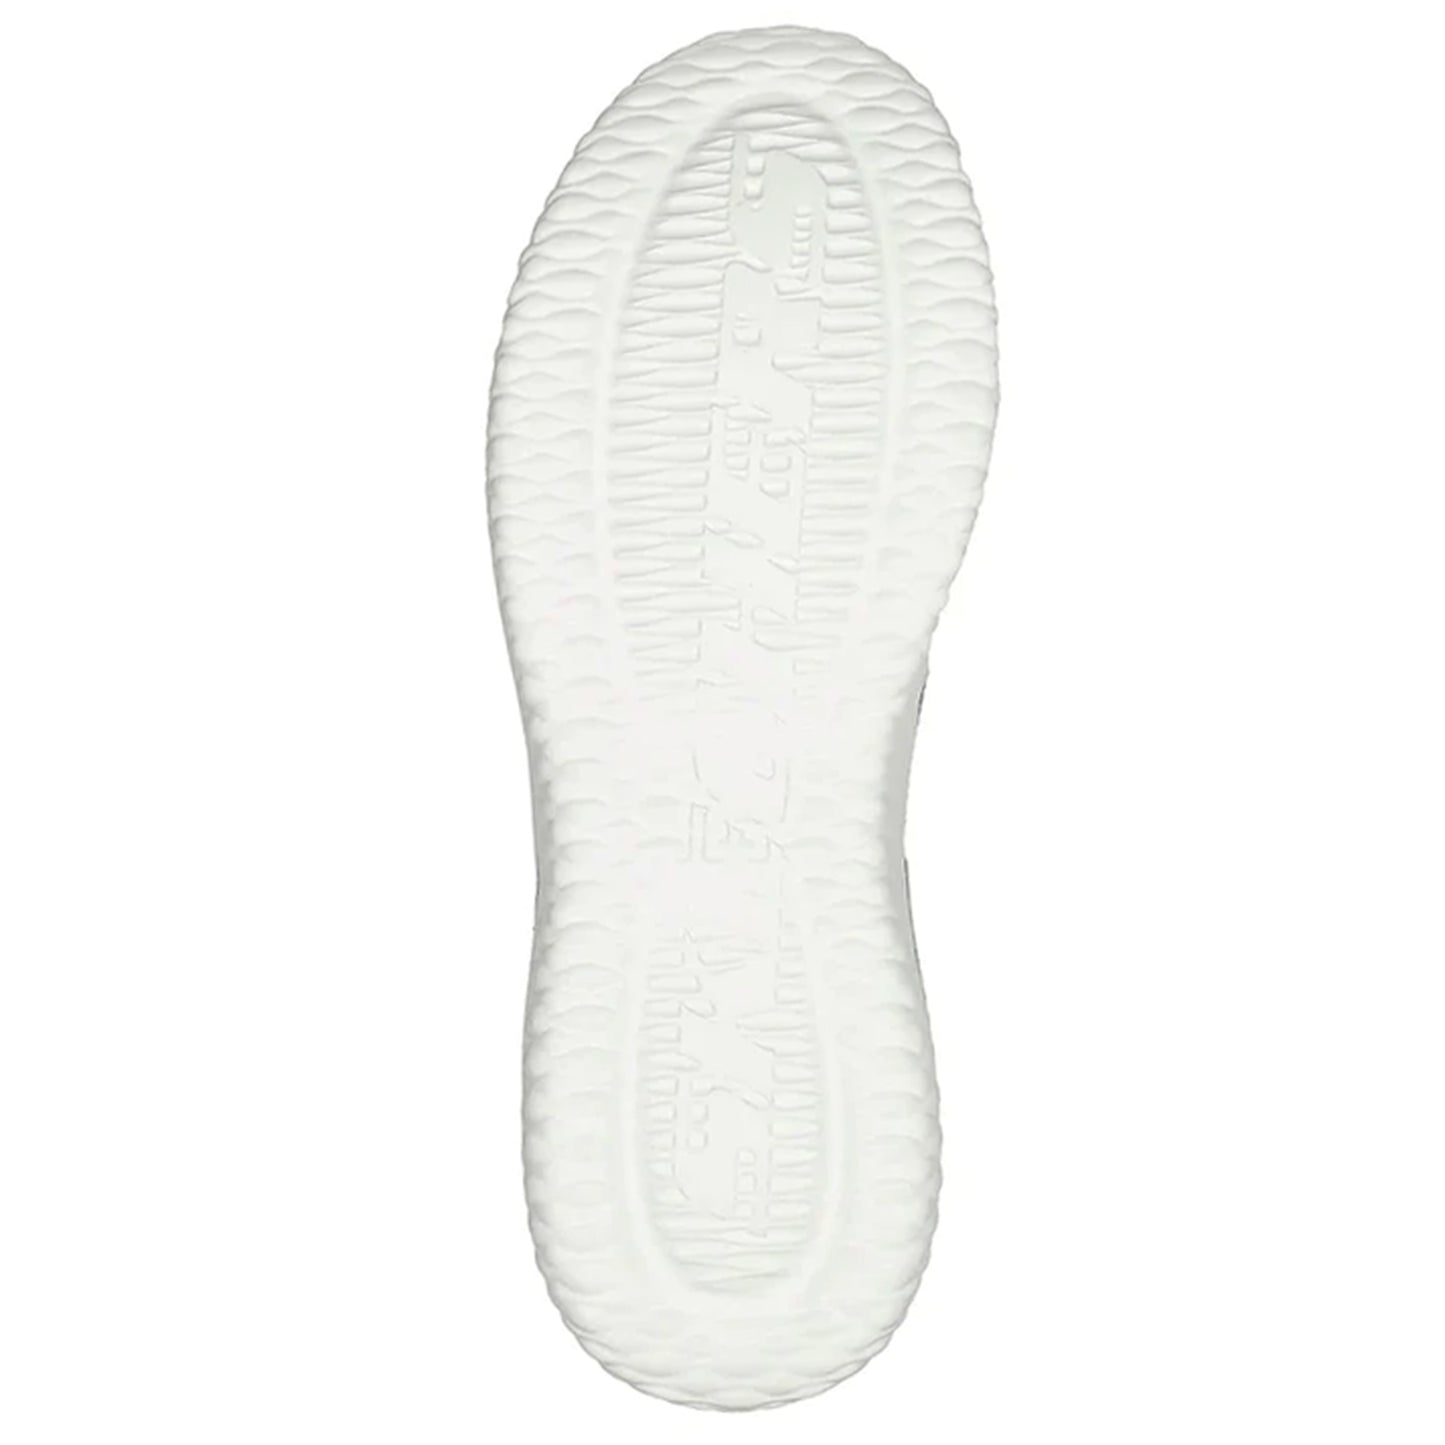 Skechers Delson 3.0 Angelo Men's Casual Shoes - Best Price online Prokicksports.com